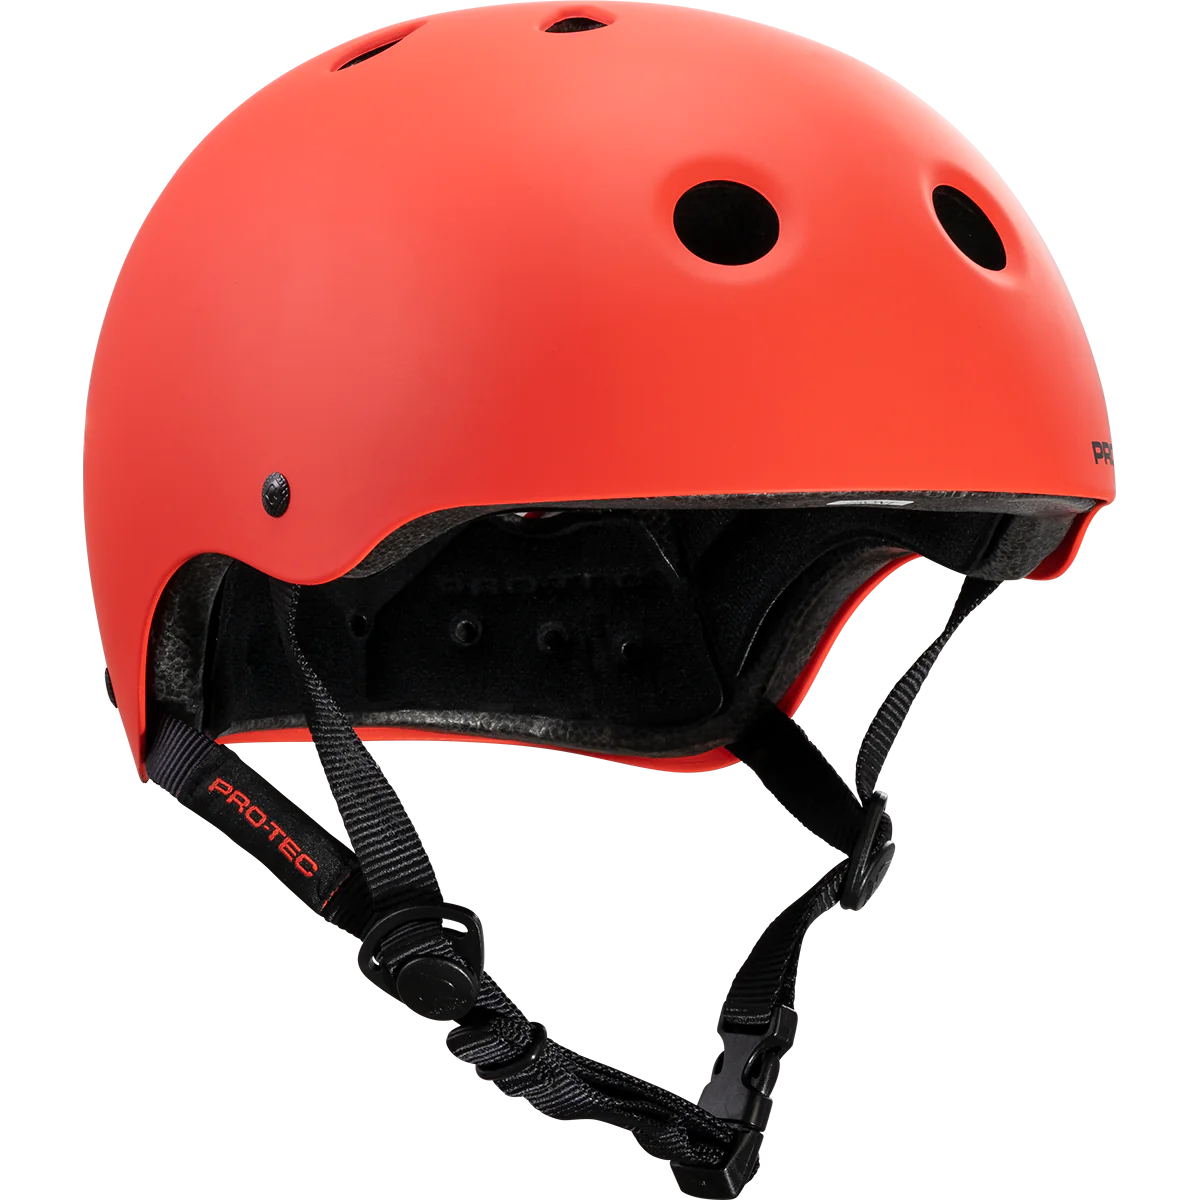 ProTec Classic Certified Matte Bright Red Helmet